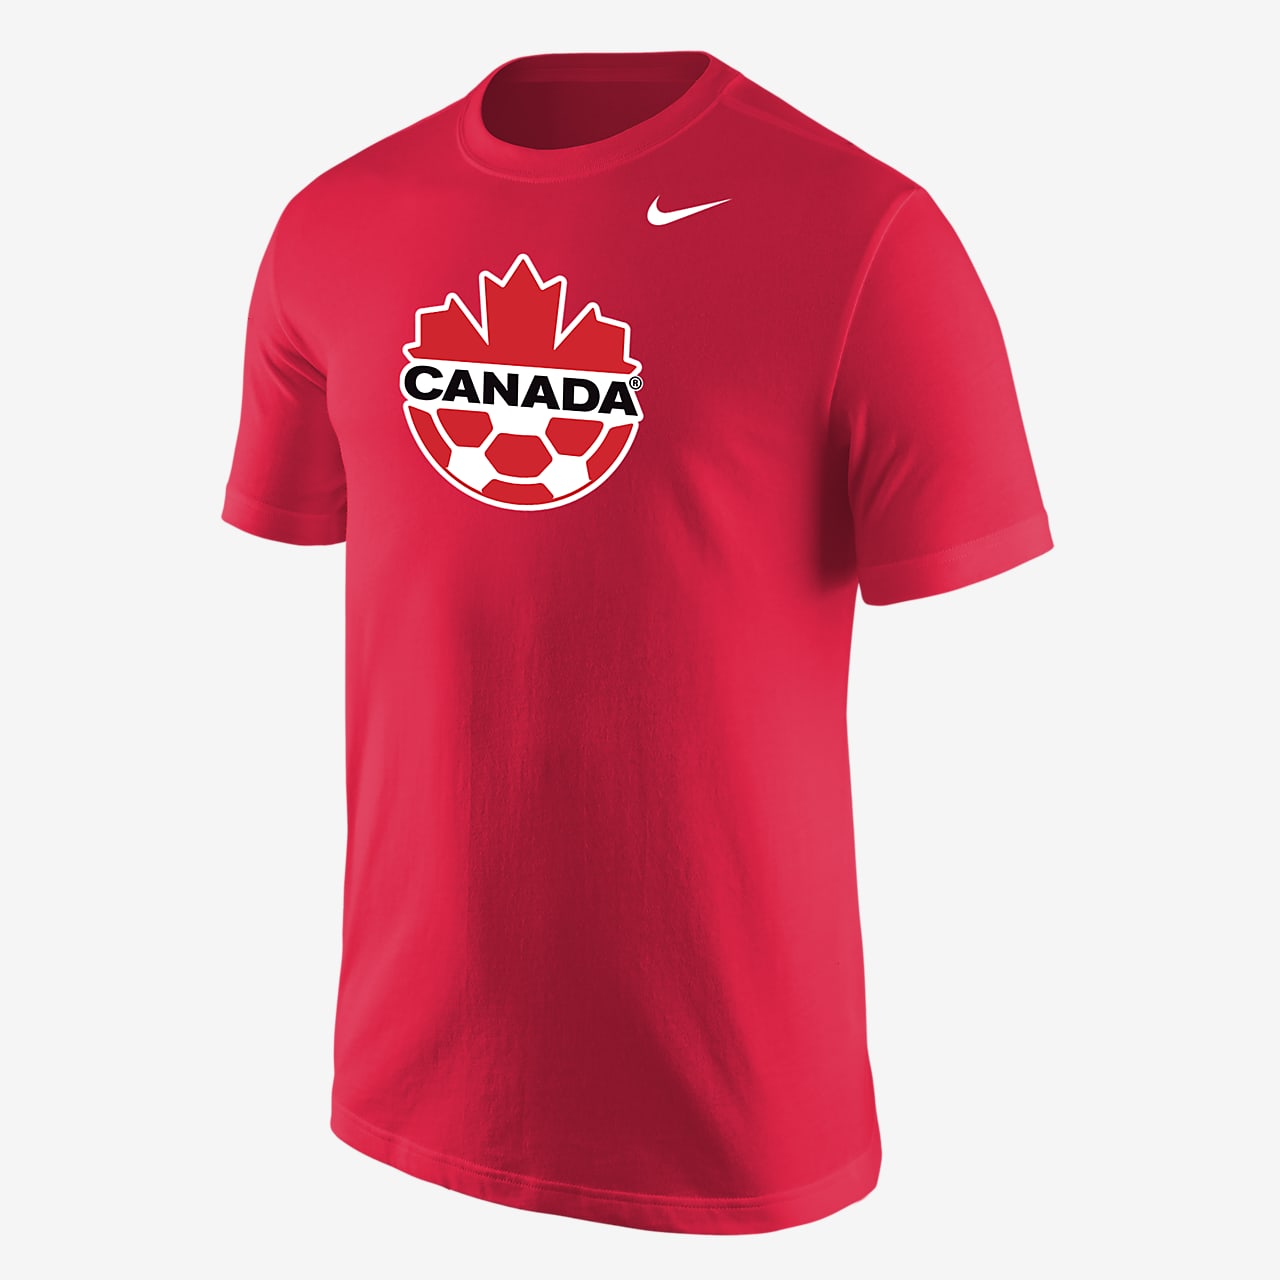 Canada Men's Nike Core Nike.com